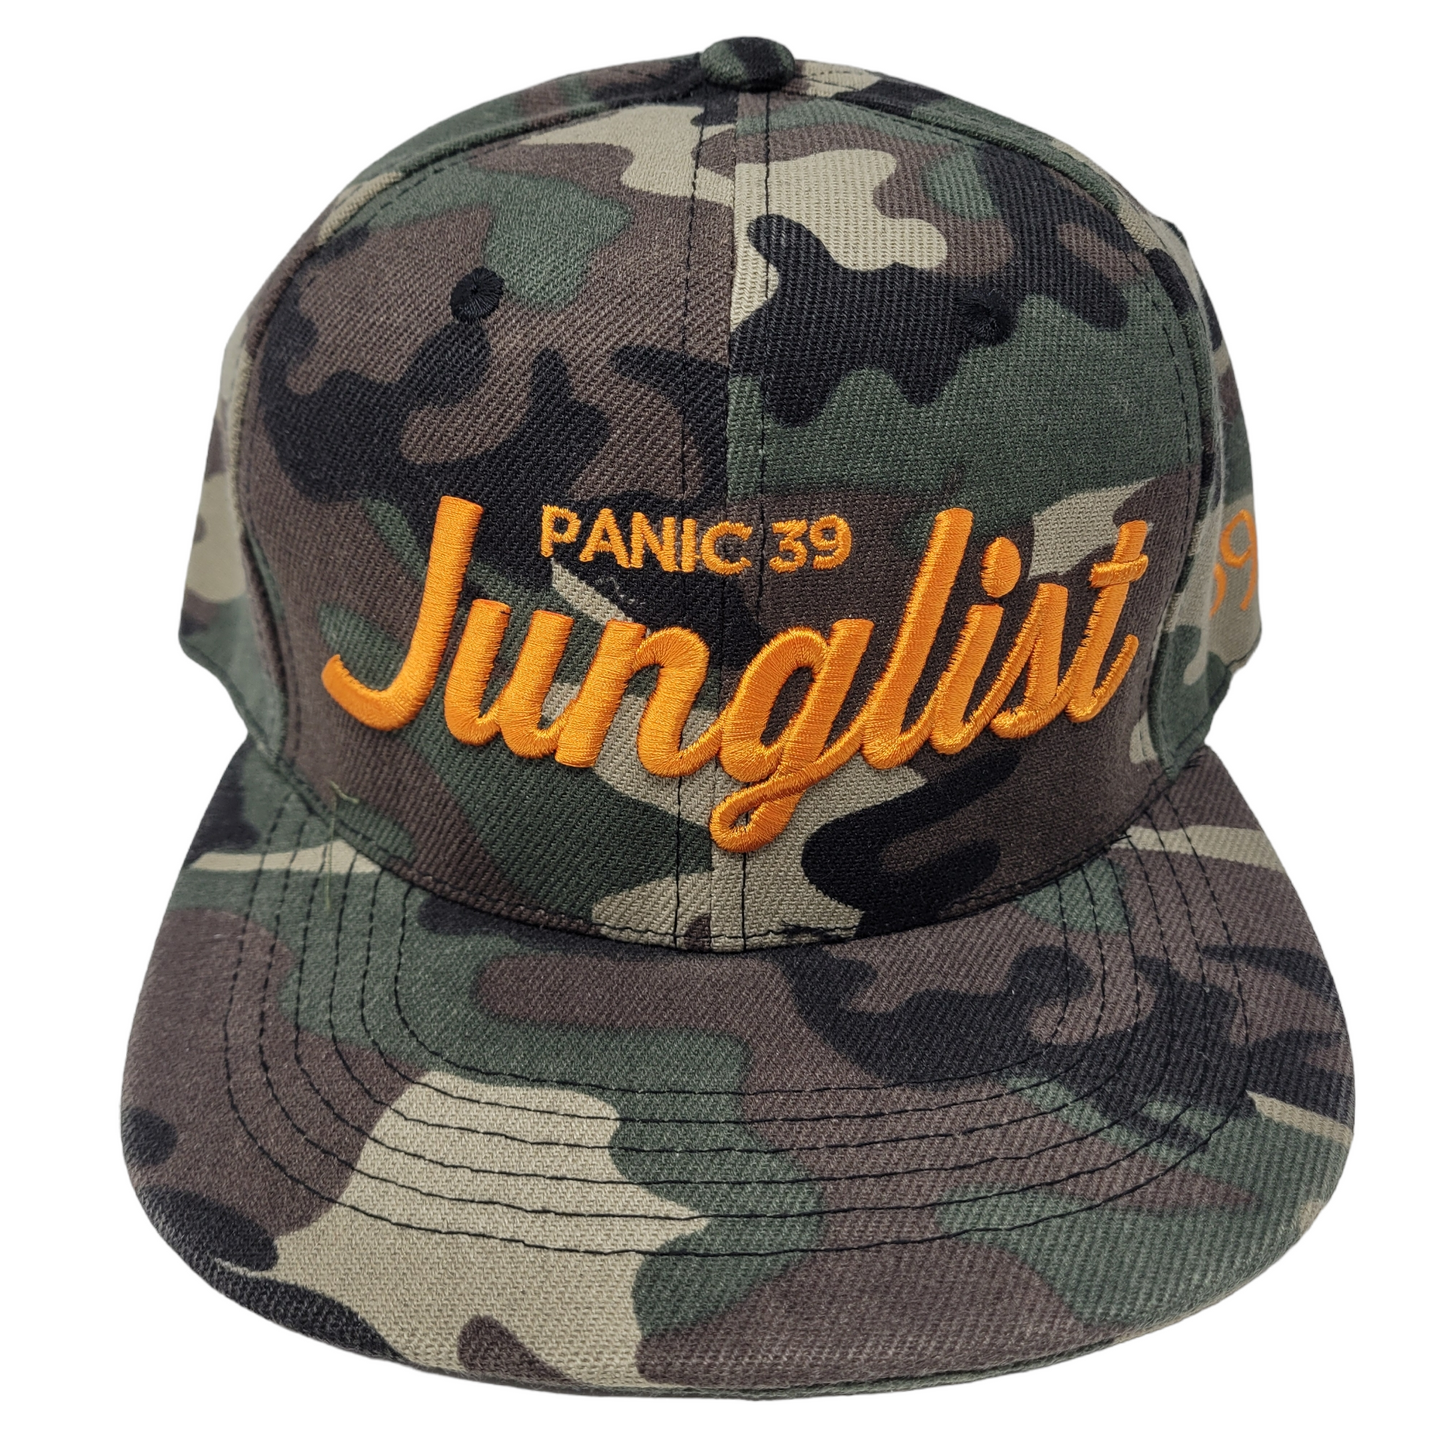 THE FOREST CAMO PANIC 39 JUNGLIST SNAPBACK BASEBALL HAT